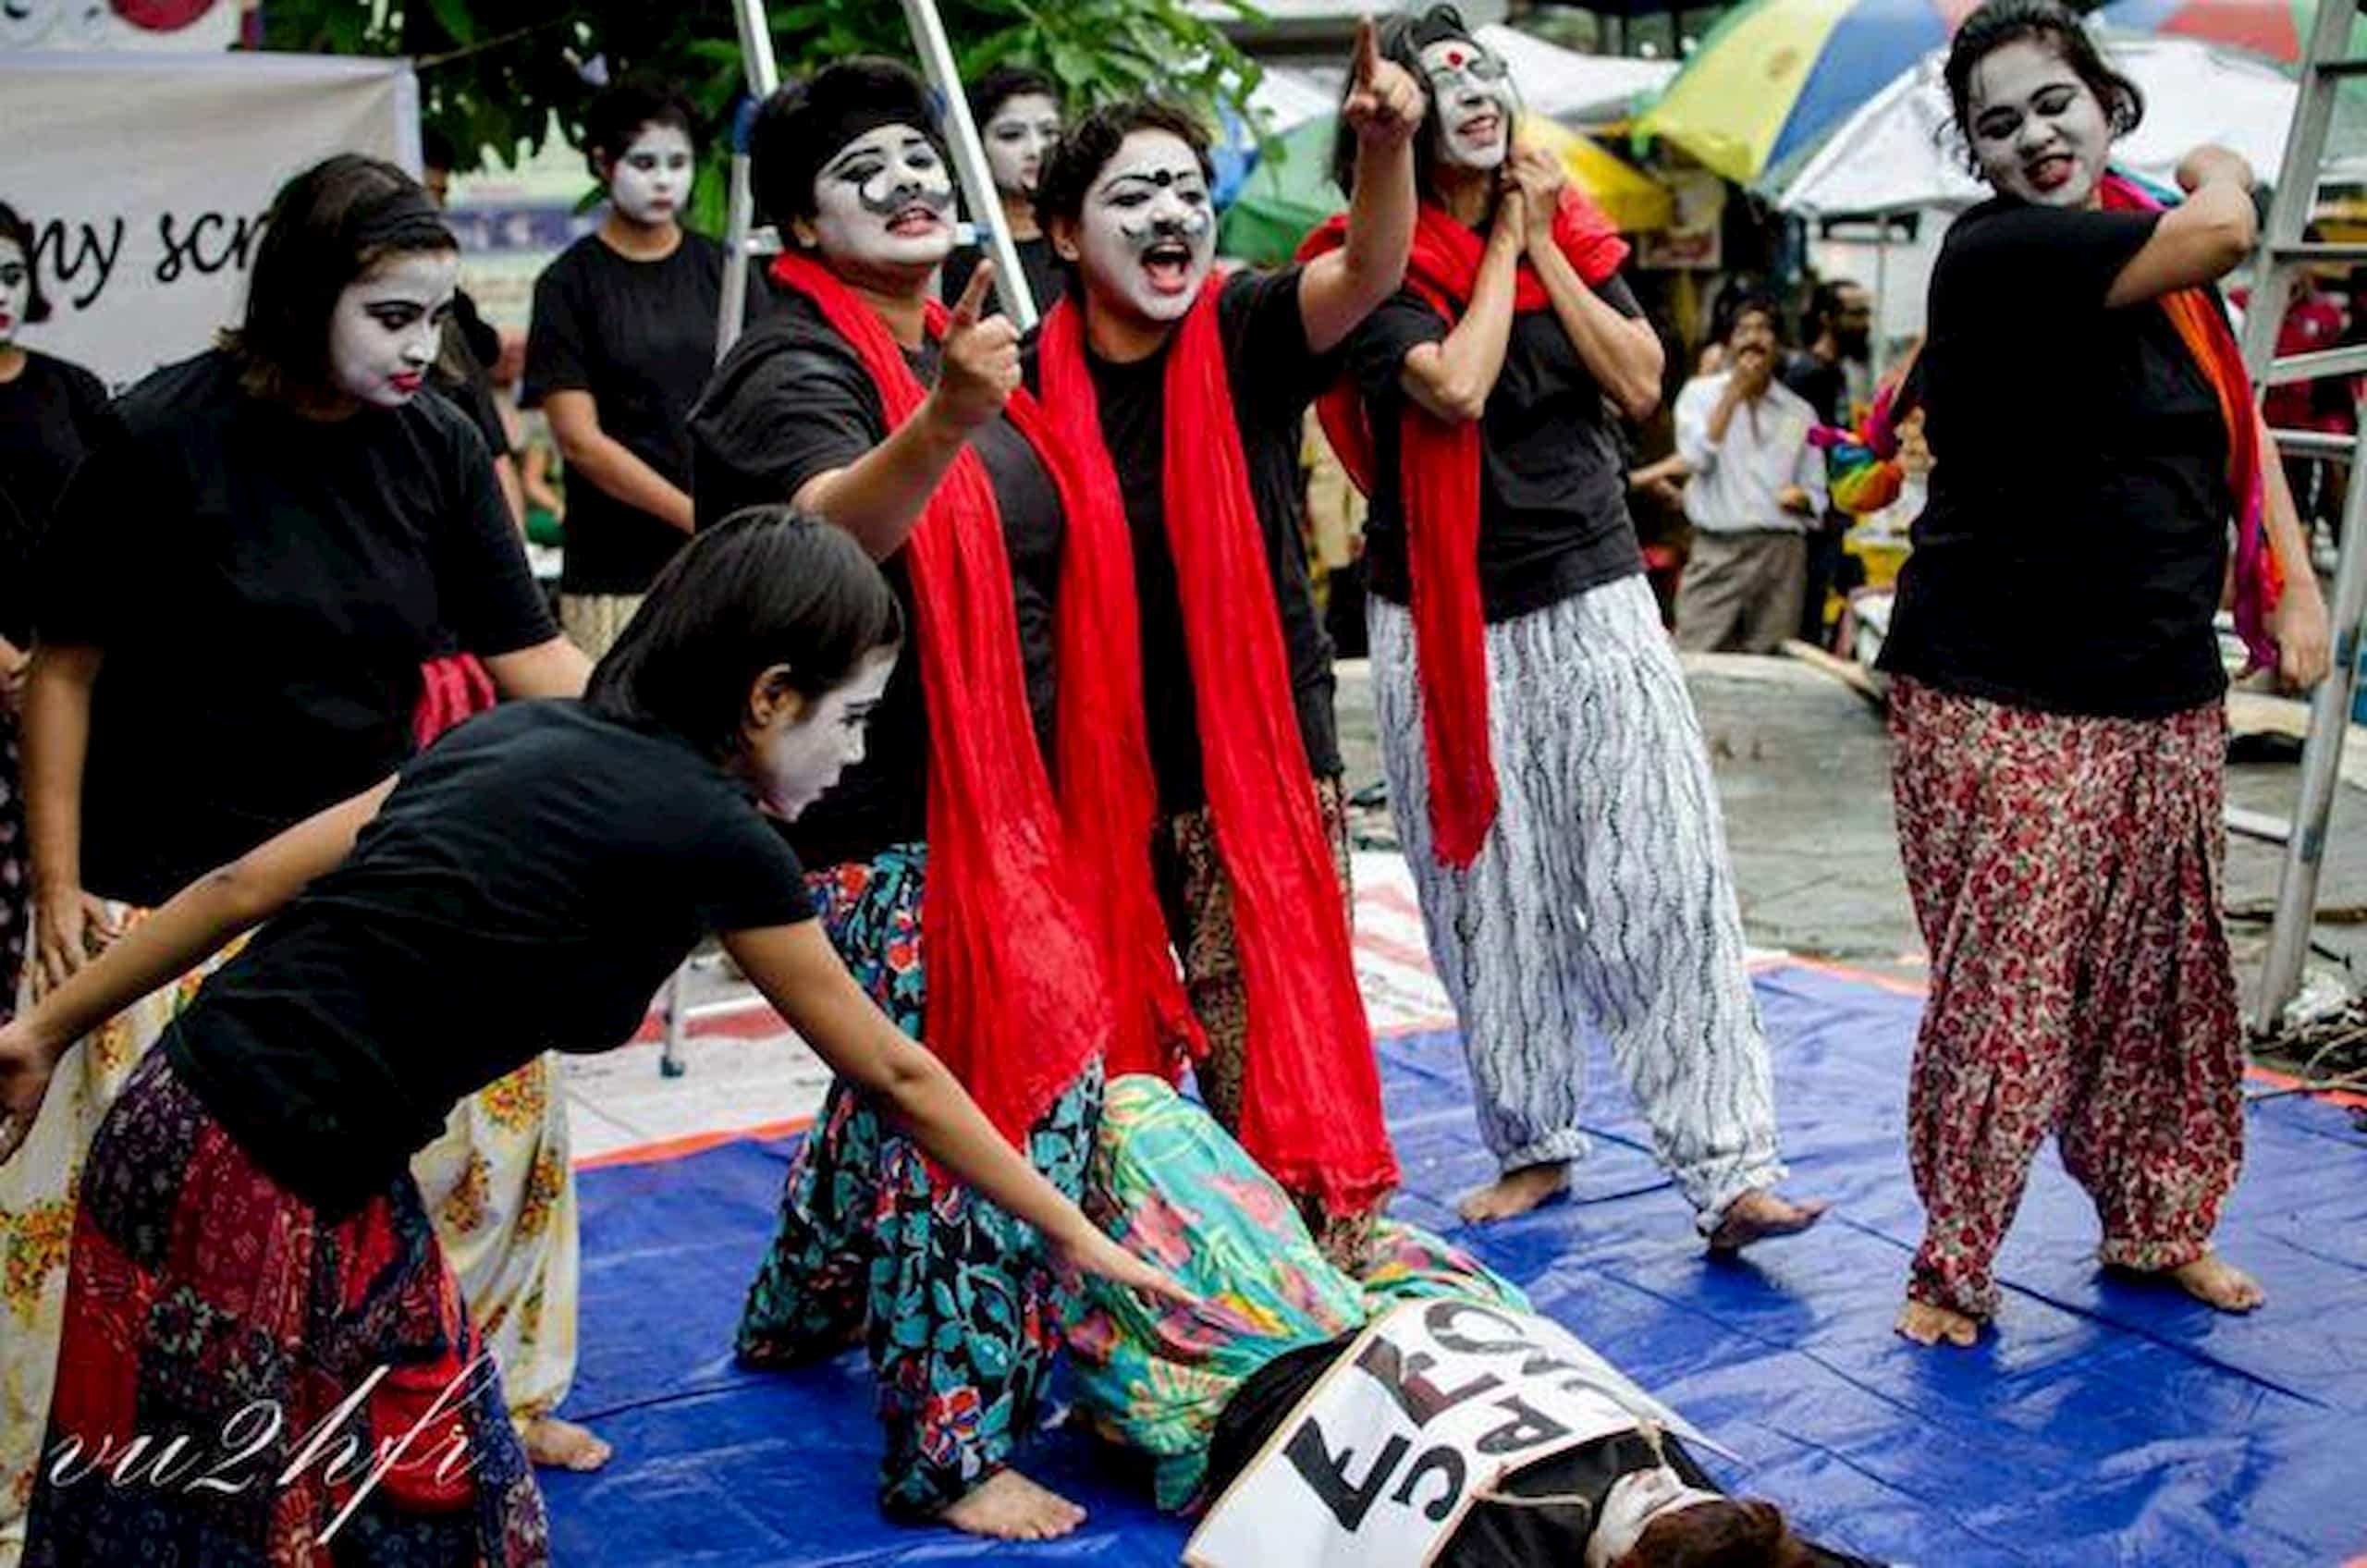 Photograph by Nilanjan Majumdar - project volunteers participate in street theatre in India